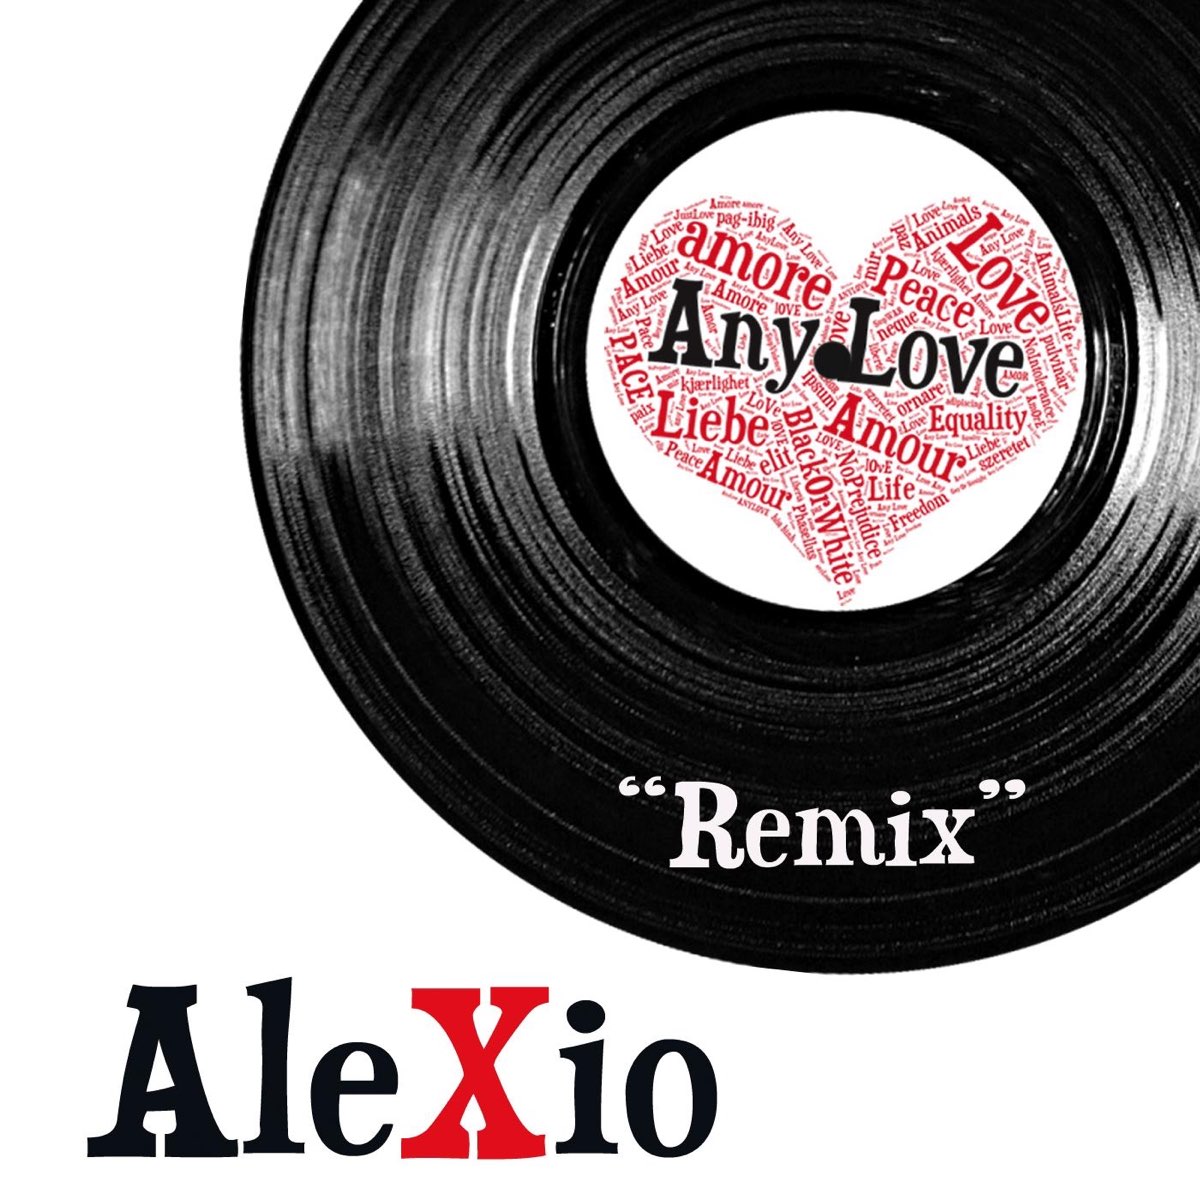 G love remix. Love Remix. Lovely песня ремикс. Любимые Remix. Any Love.